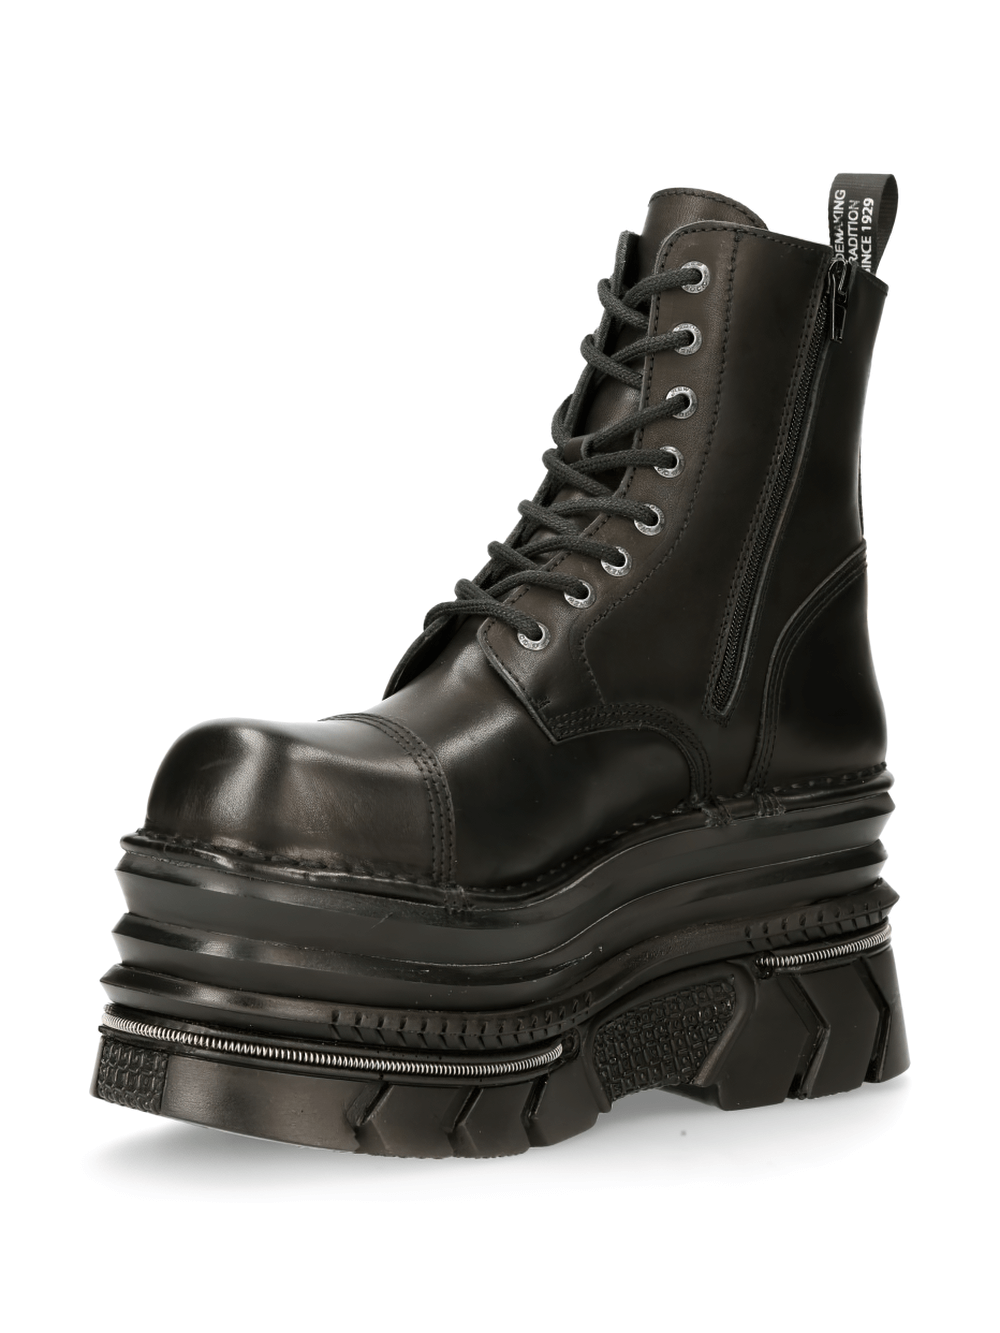 NEW ROCK Black Gothic Punk Platform Lace-Up Ankle Boots